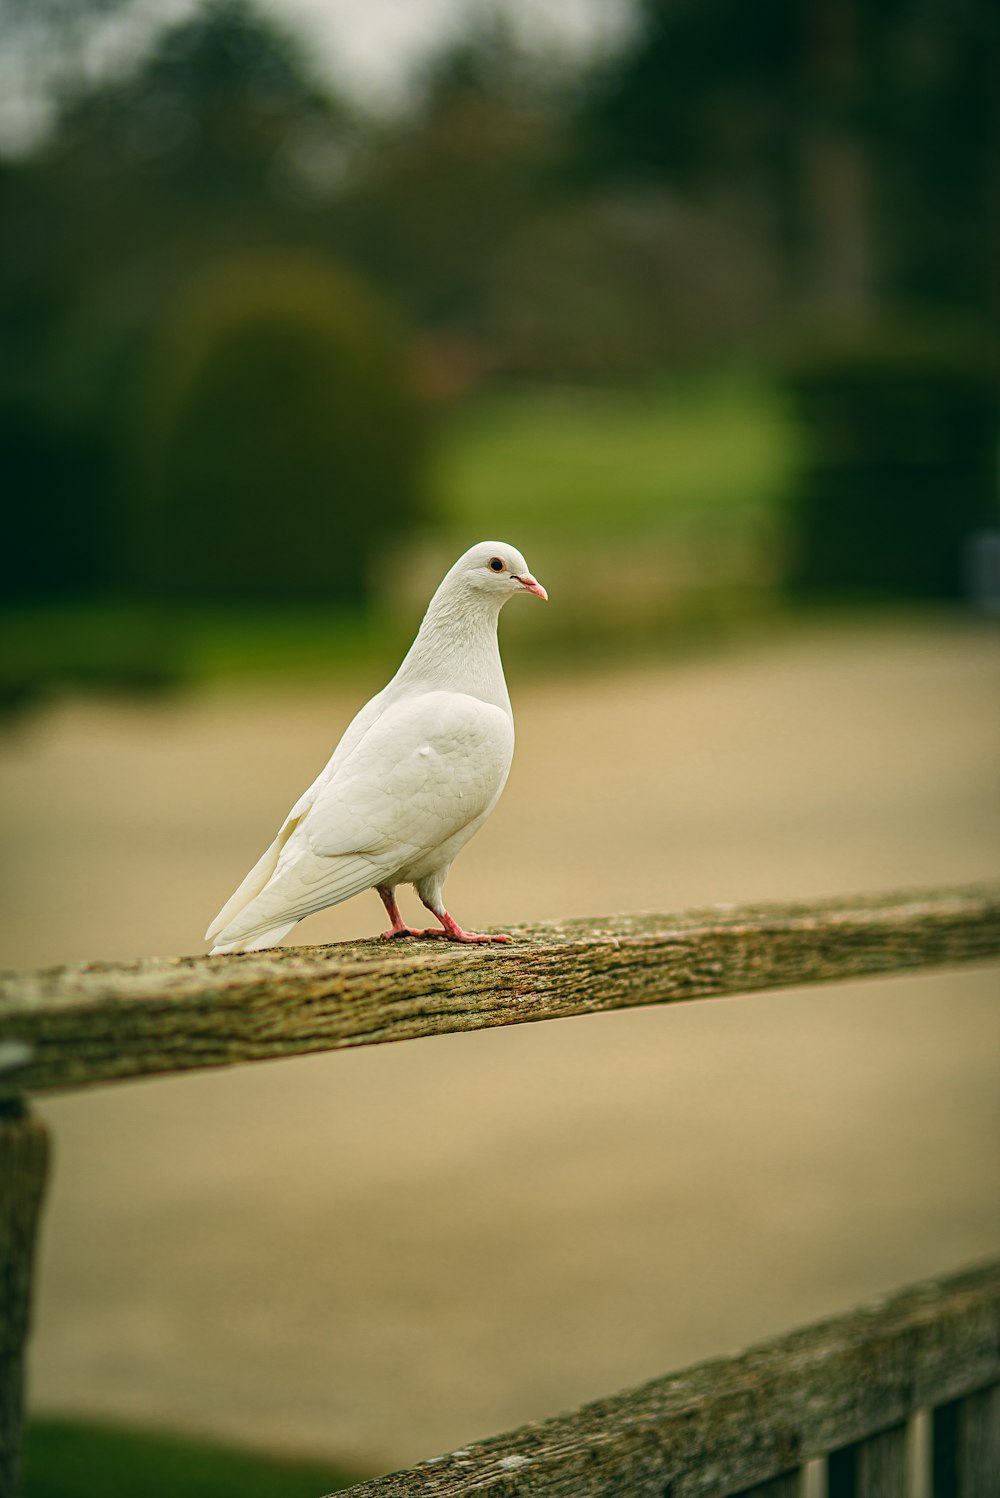 a white bird sitting on a wooden rail